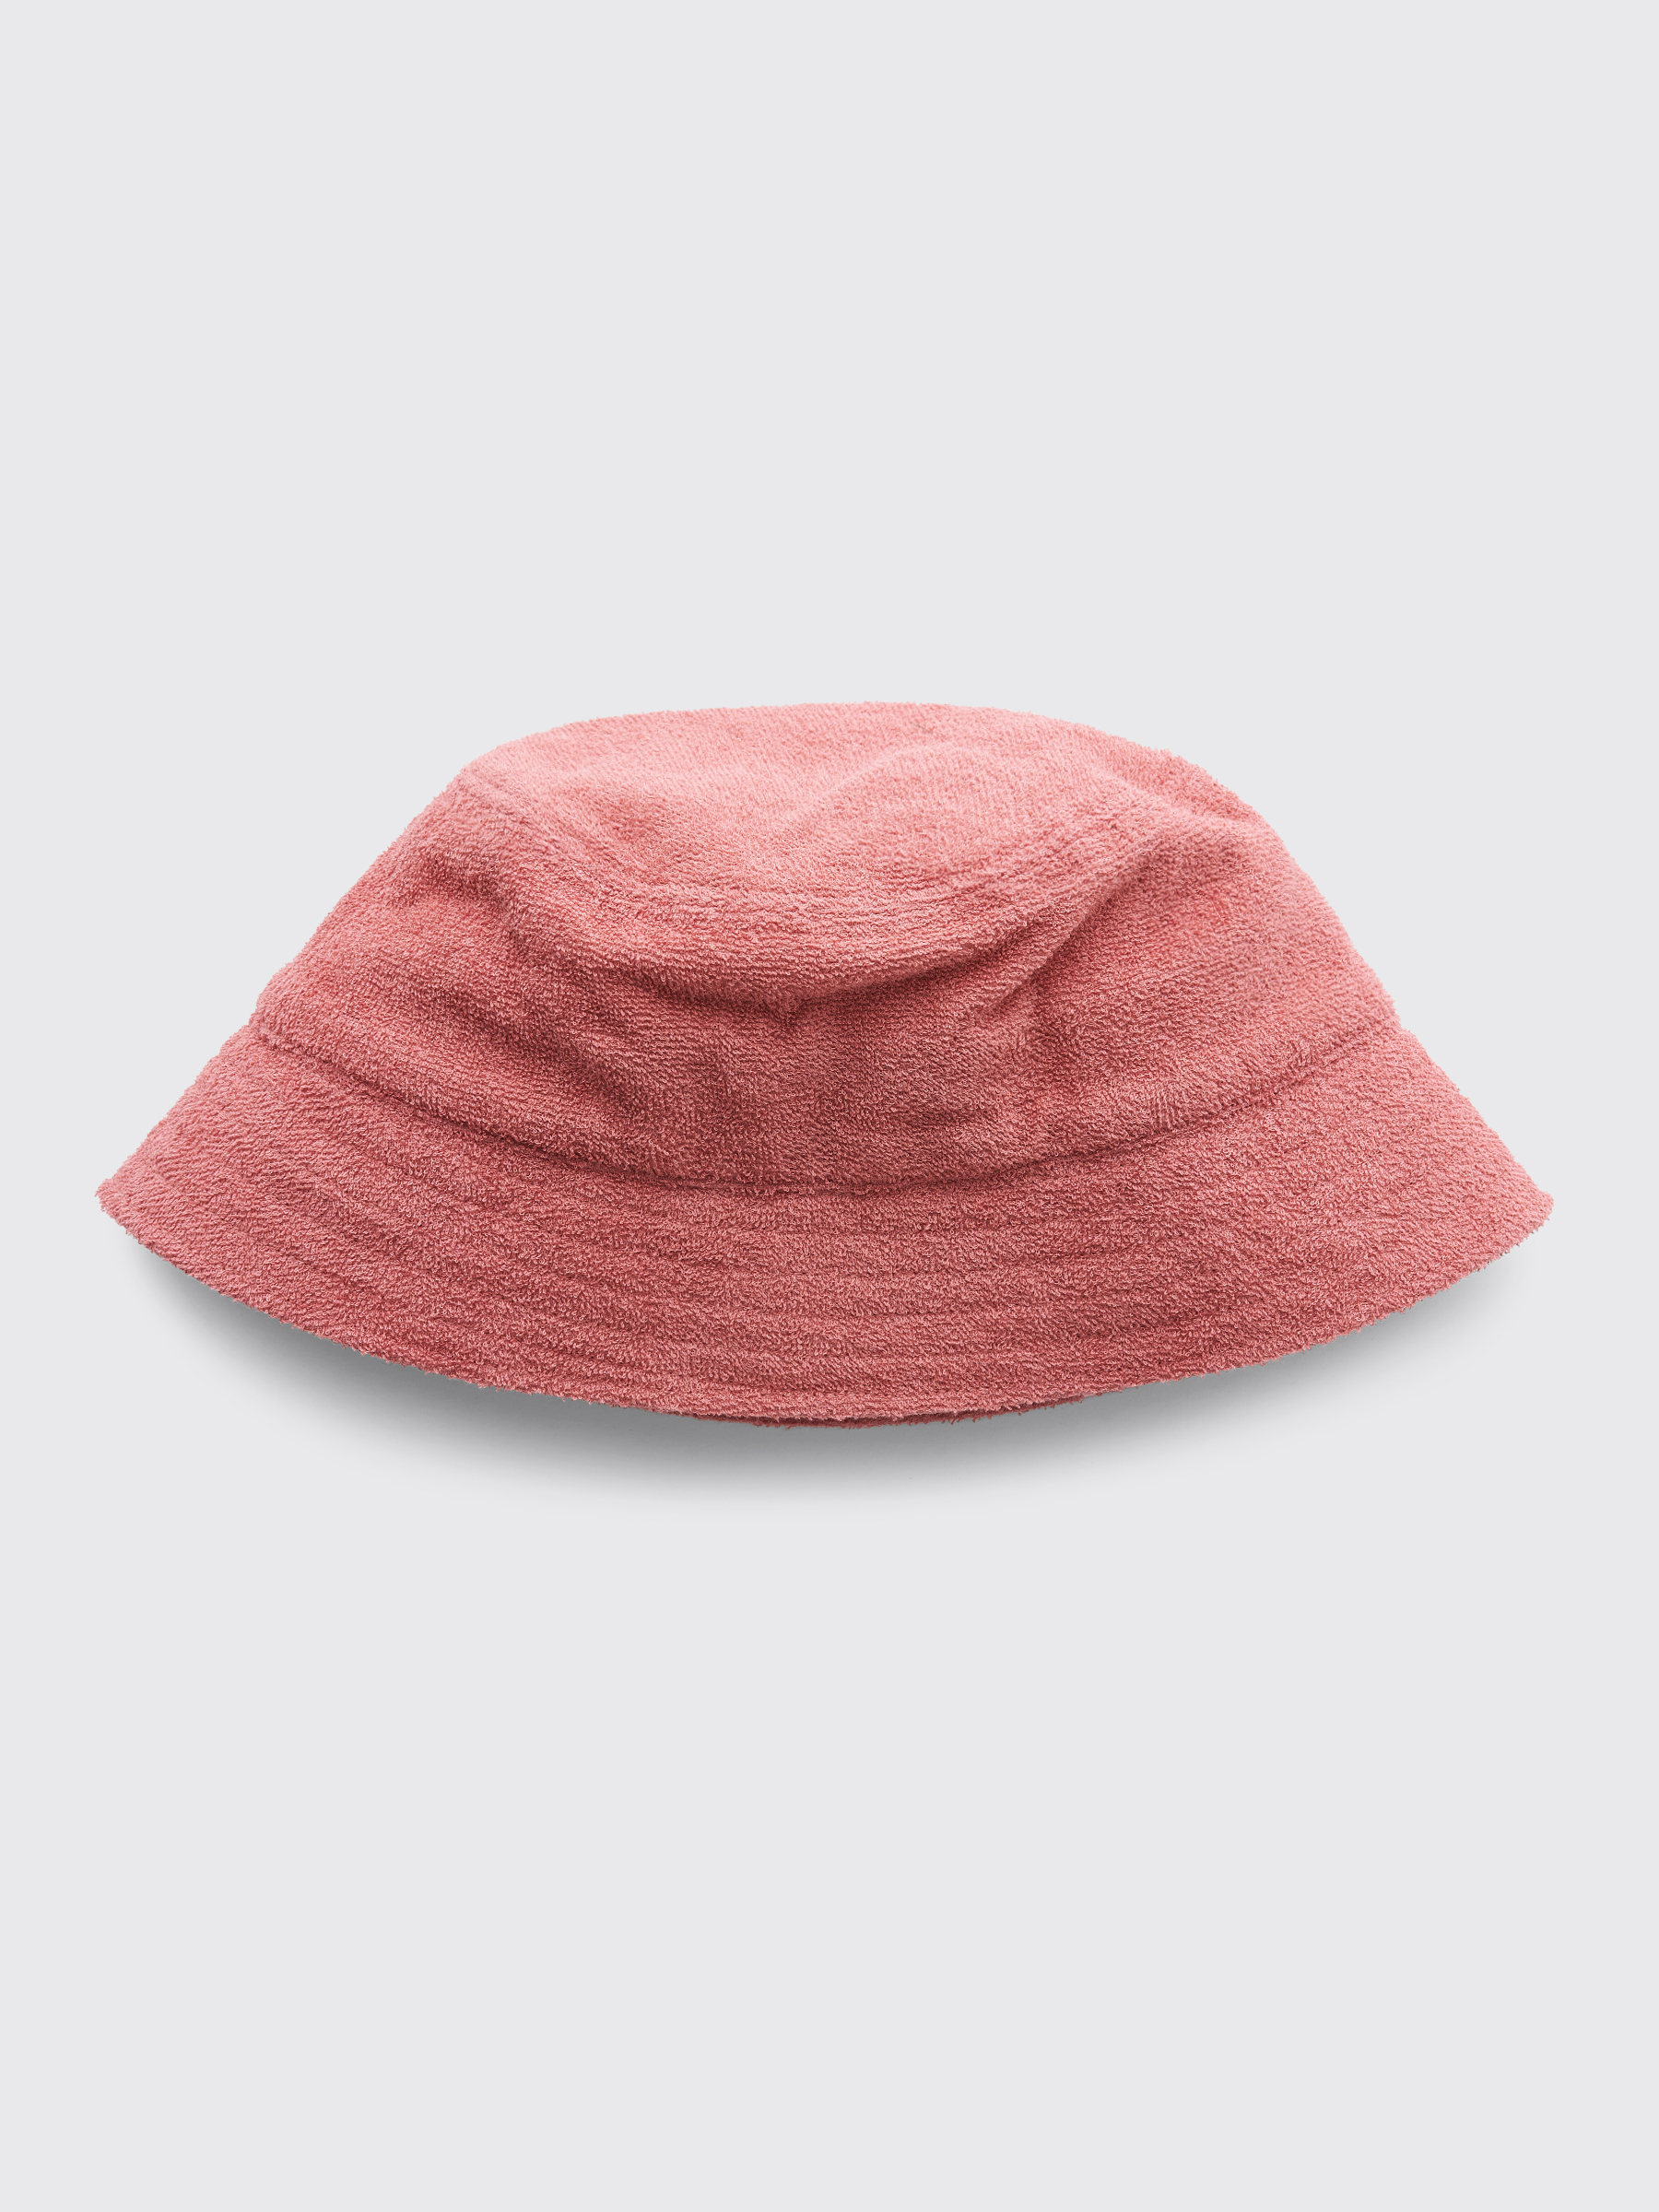 Très Bien - Auralee Terry Cloth Bucket Hat Pink Made By Kijima